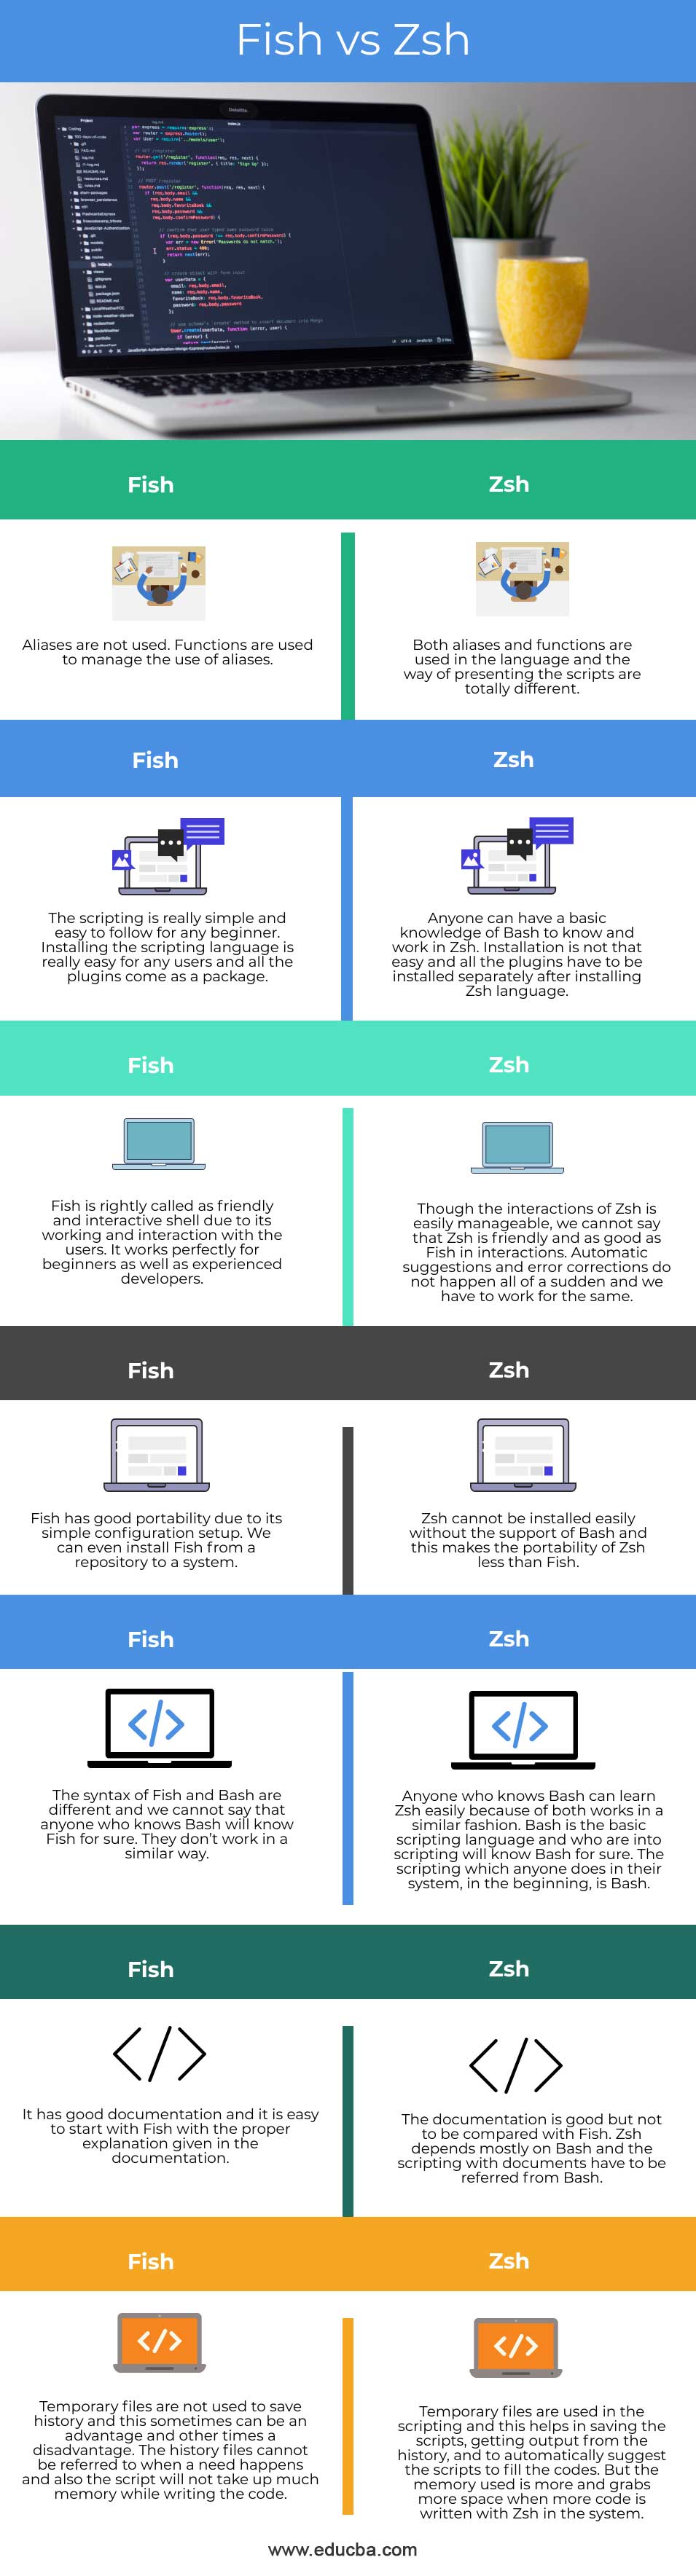 Fish-vs-Zsh-info